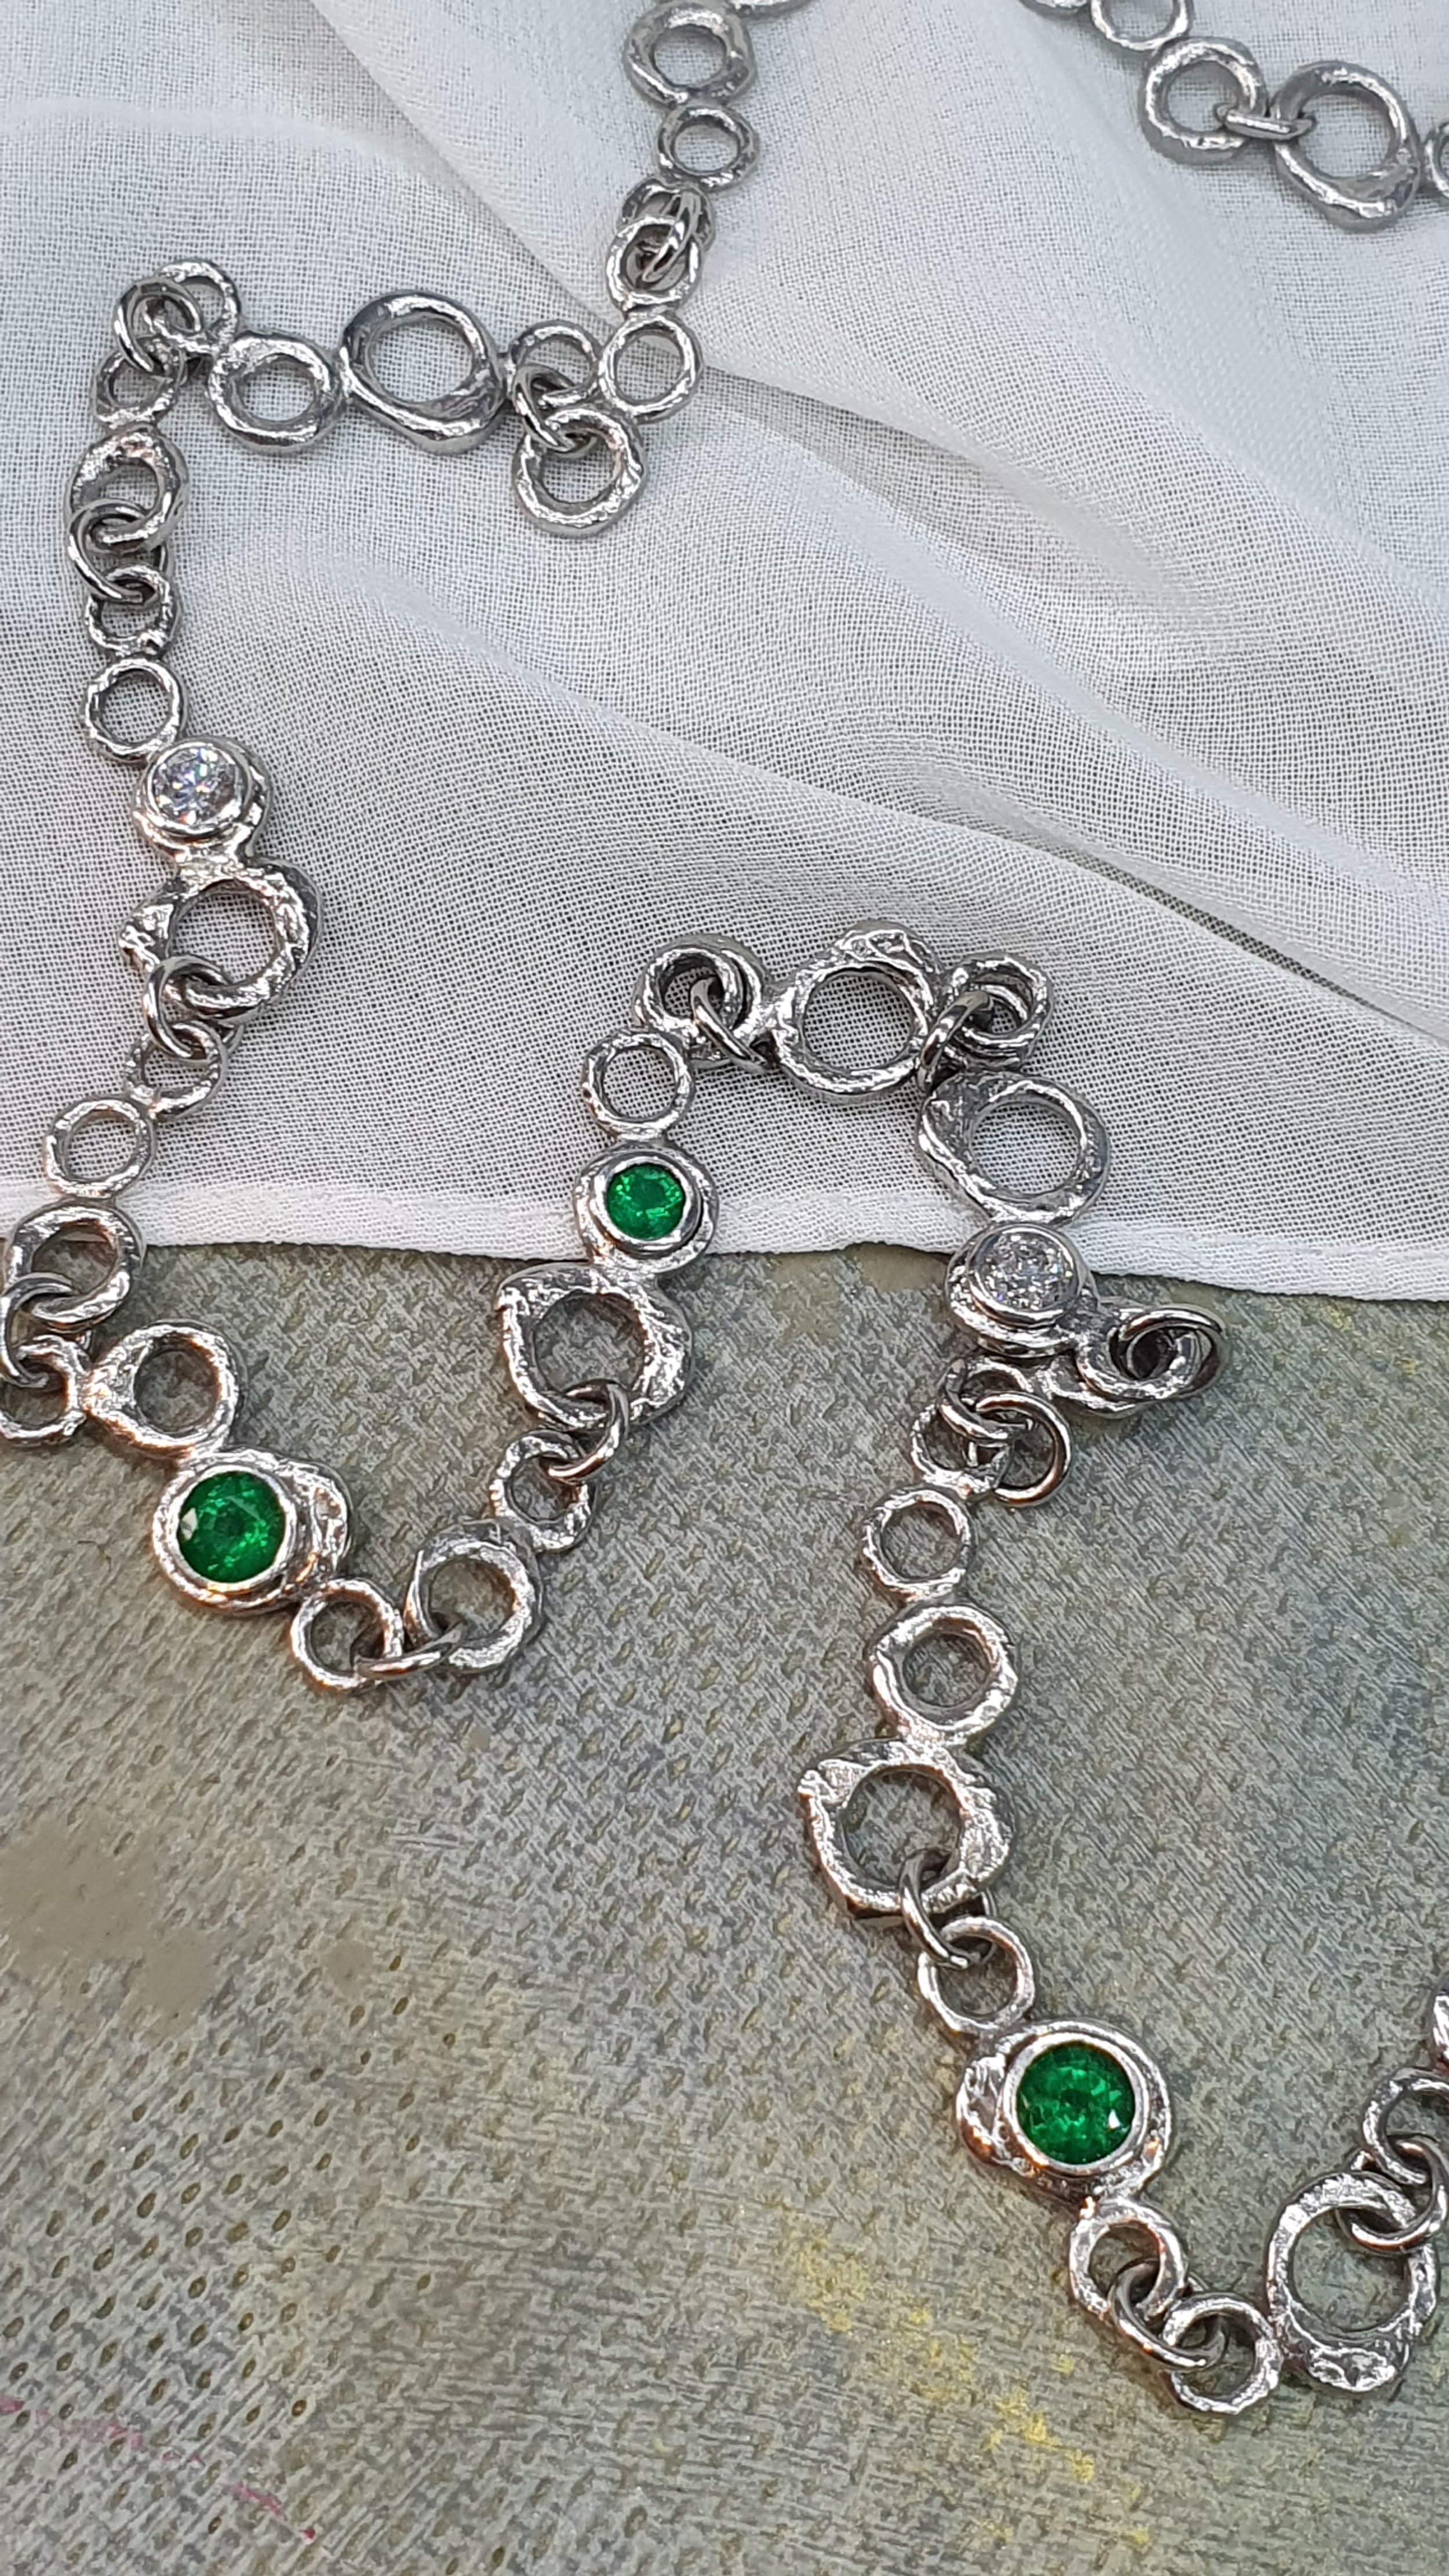 Platinum, emerald and diamond necklace commission